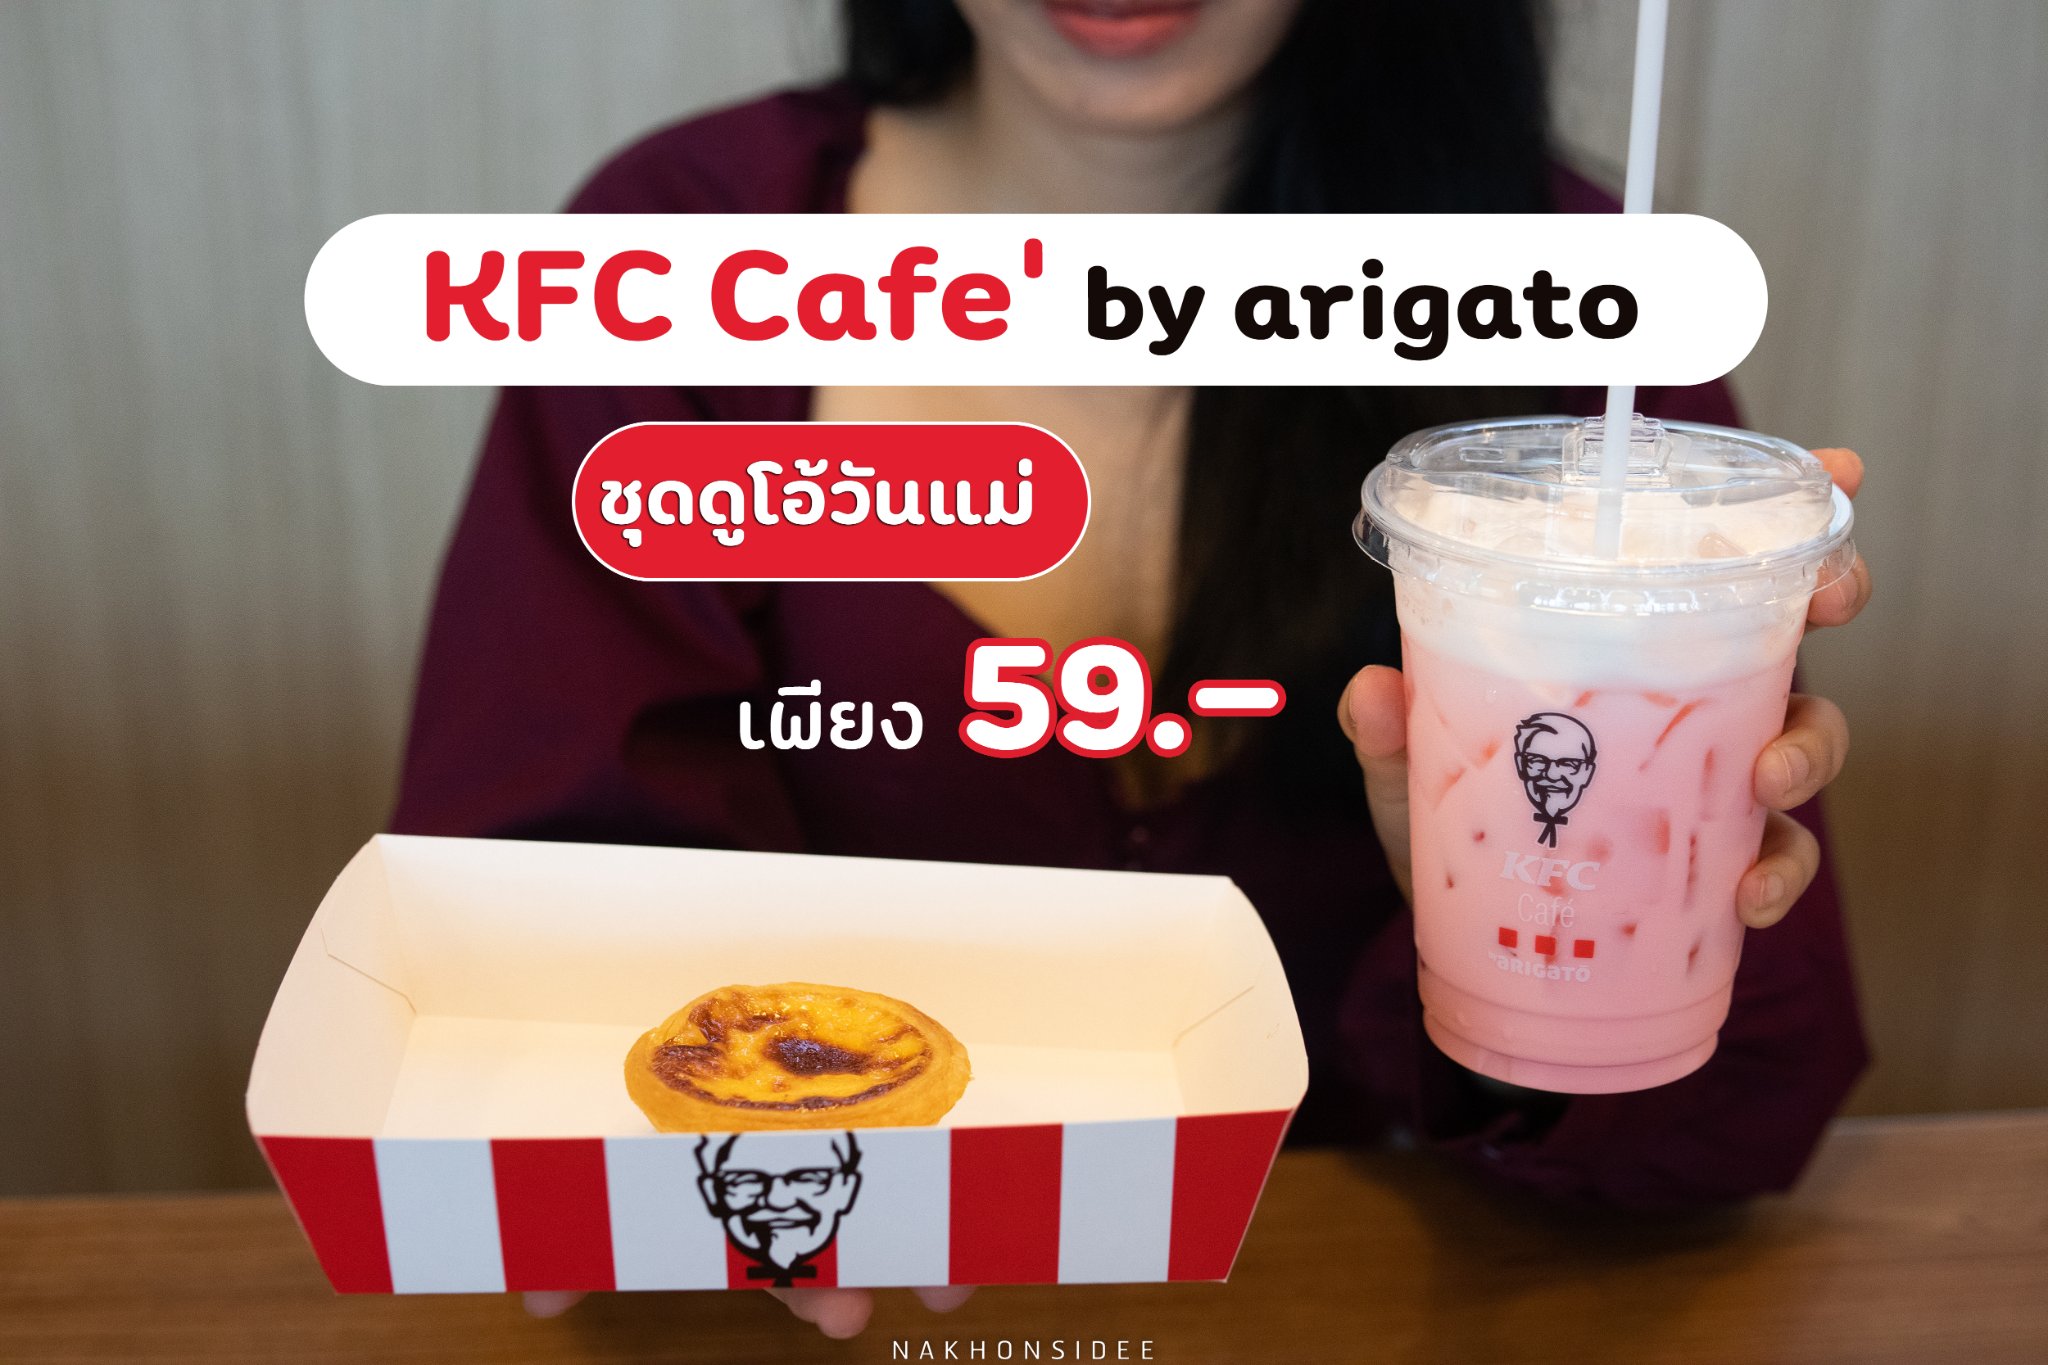 KFC Cafe by arigato ชุดดูโอ้สุดคุ้ม